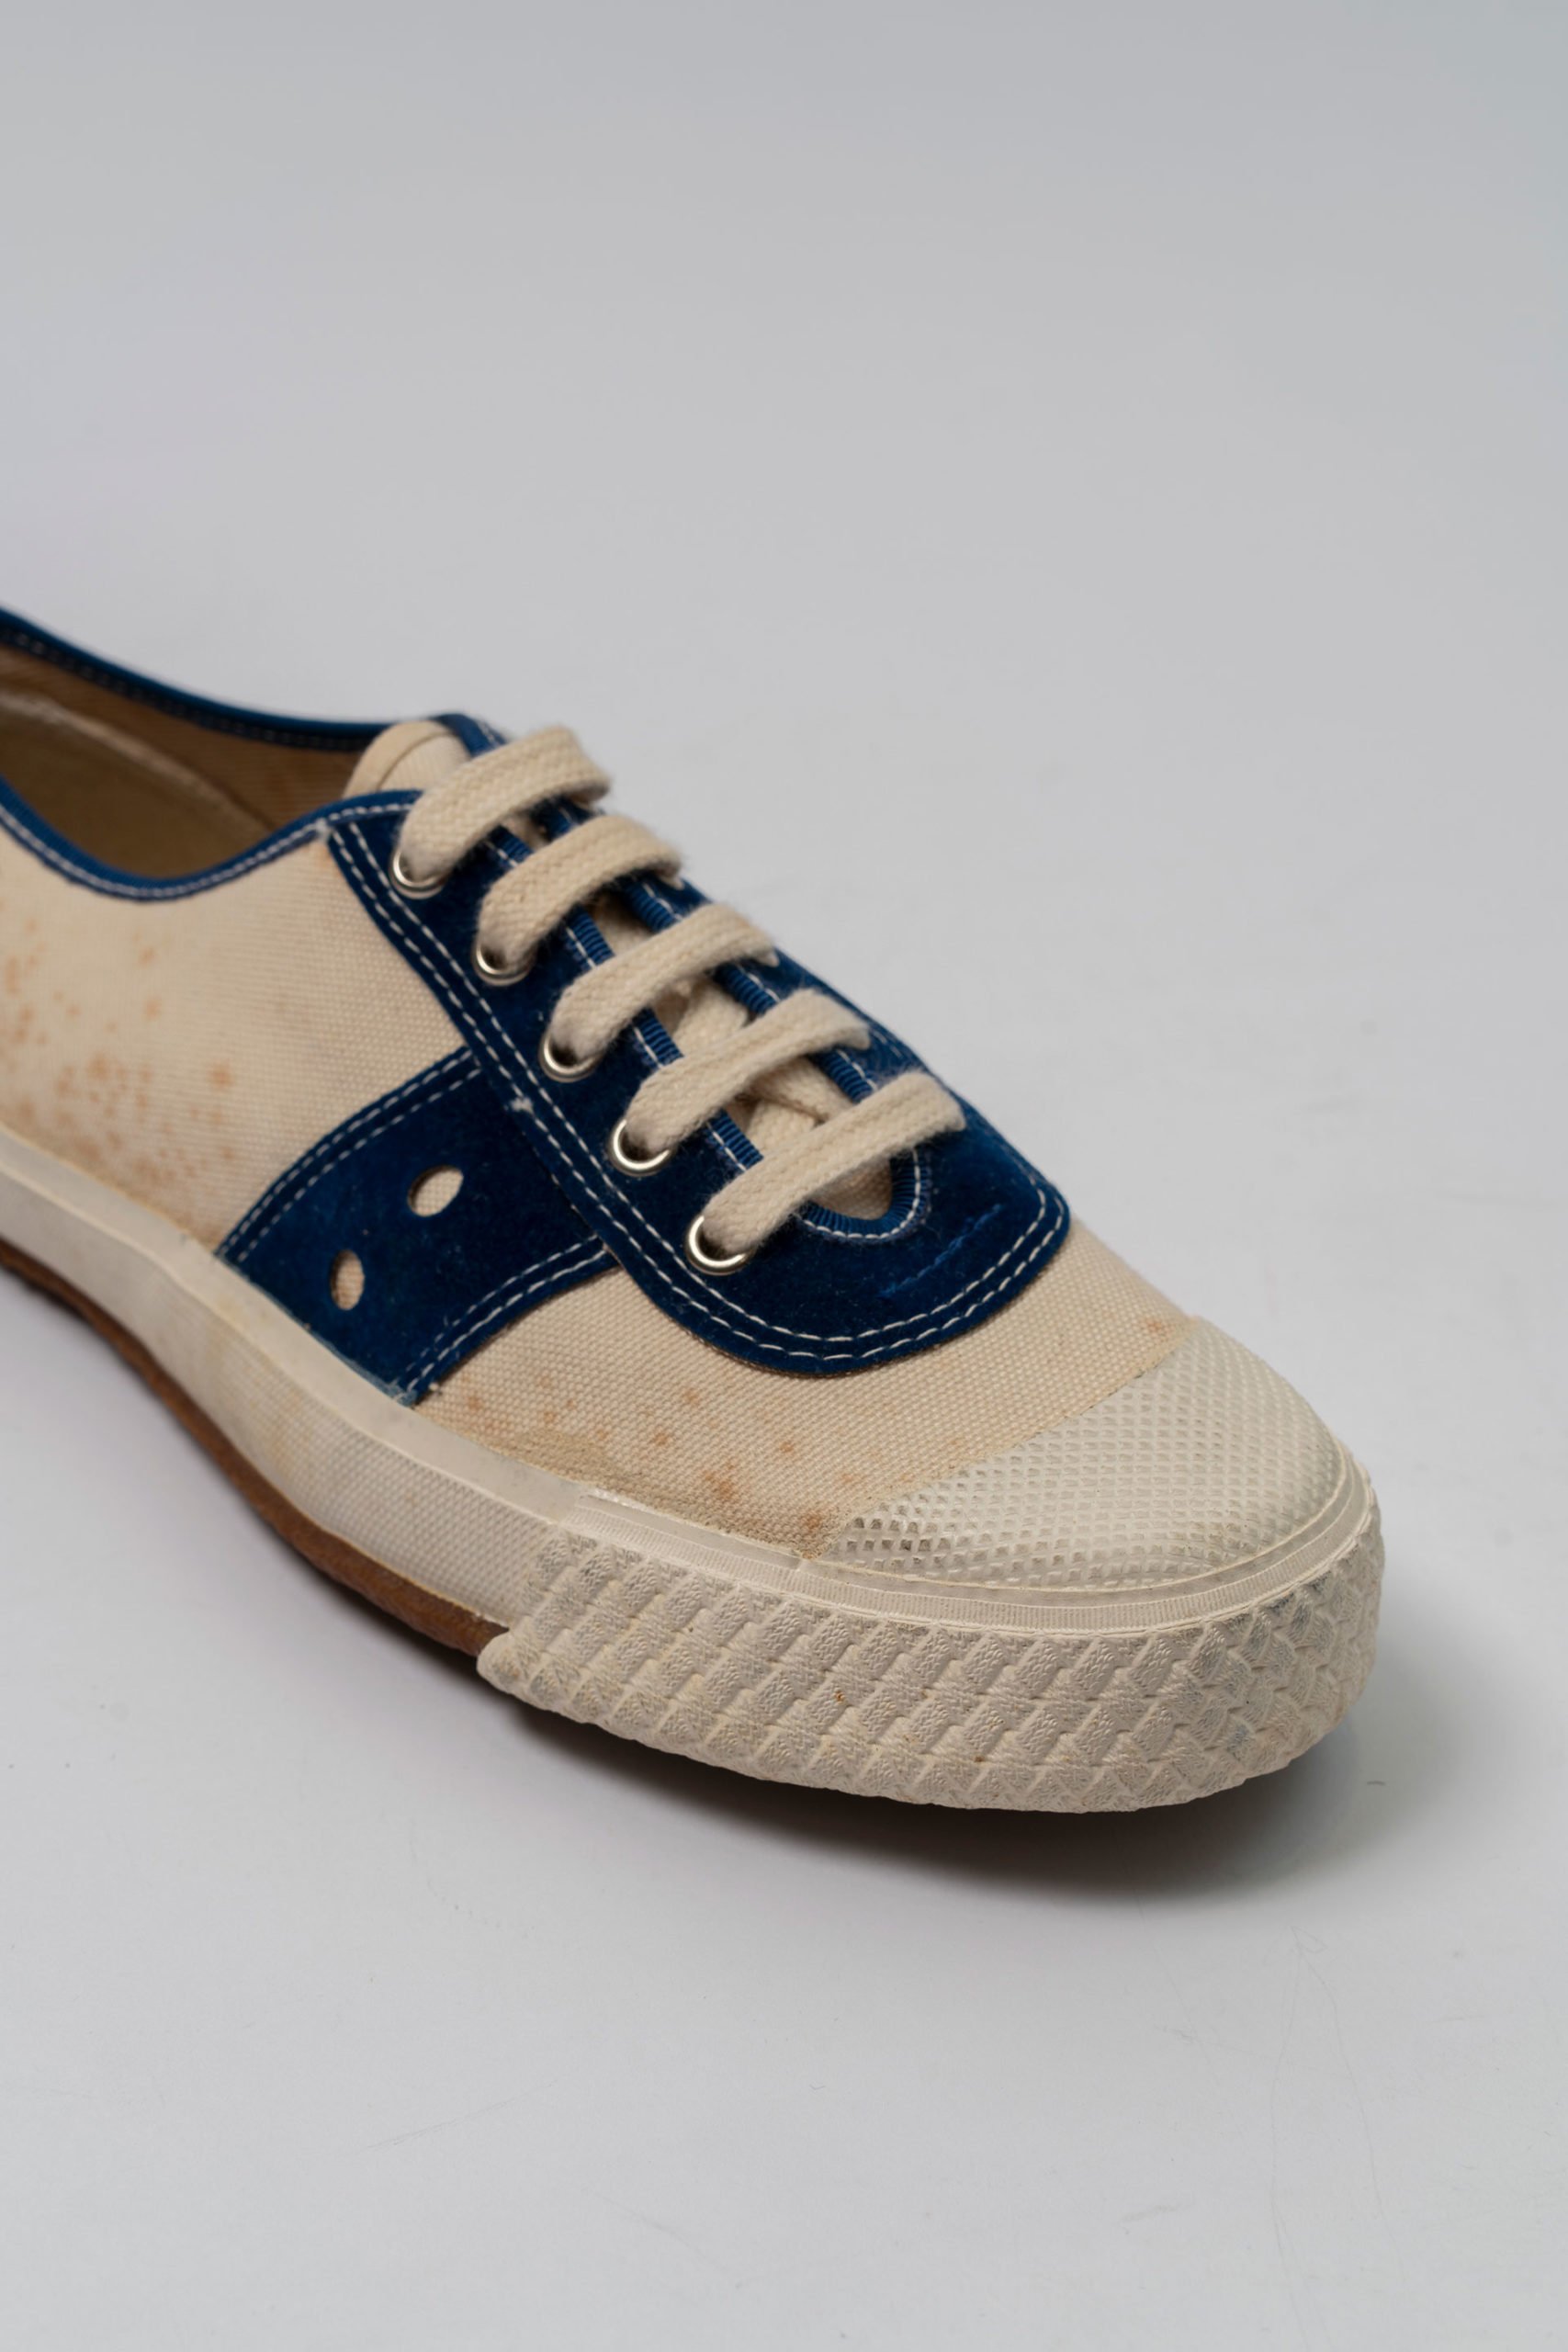 trento-panna-velluto-blu-sneakers-vintage-trentovintage-vintagesneakers-duemilanomarittima-letsdue-letsdueit-deadstock-deadstockvintage_07-scaled